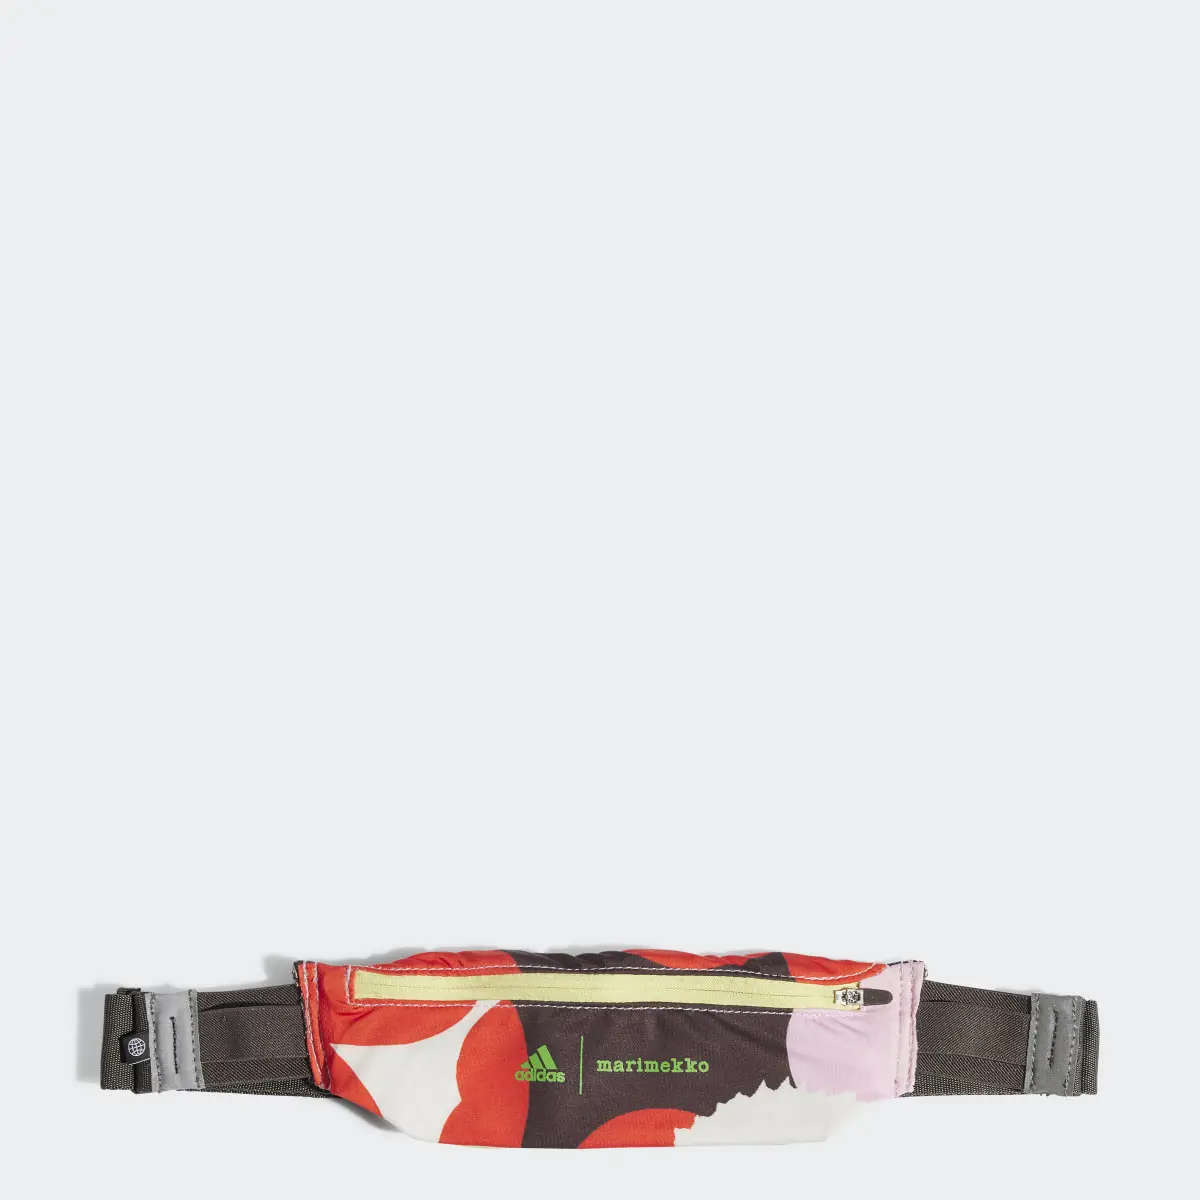 Adidas Marimekko Running Belt. 1